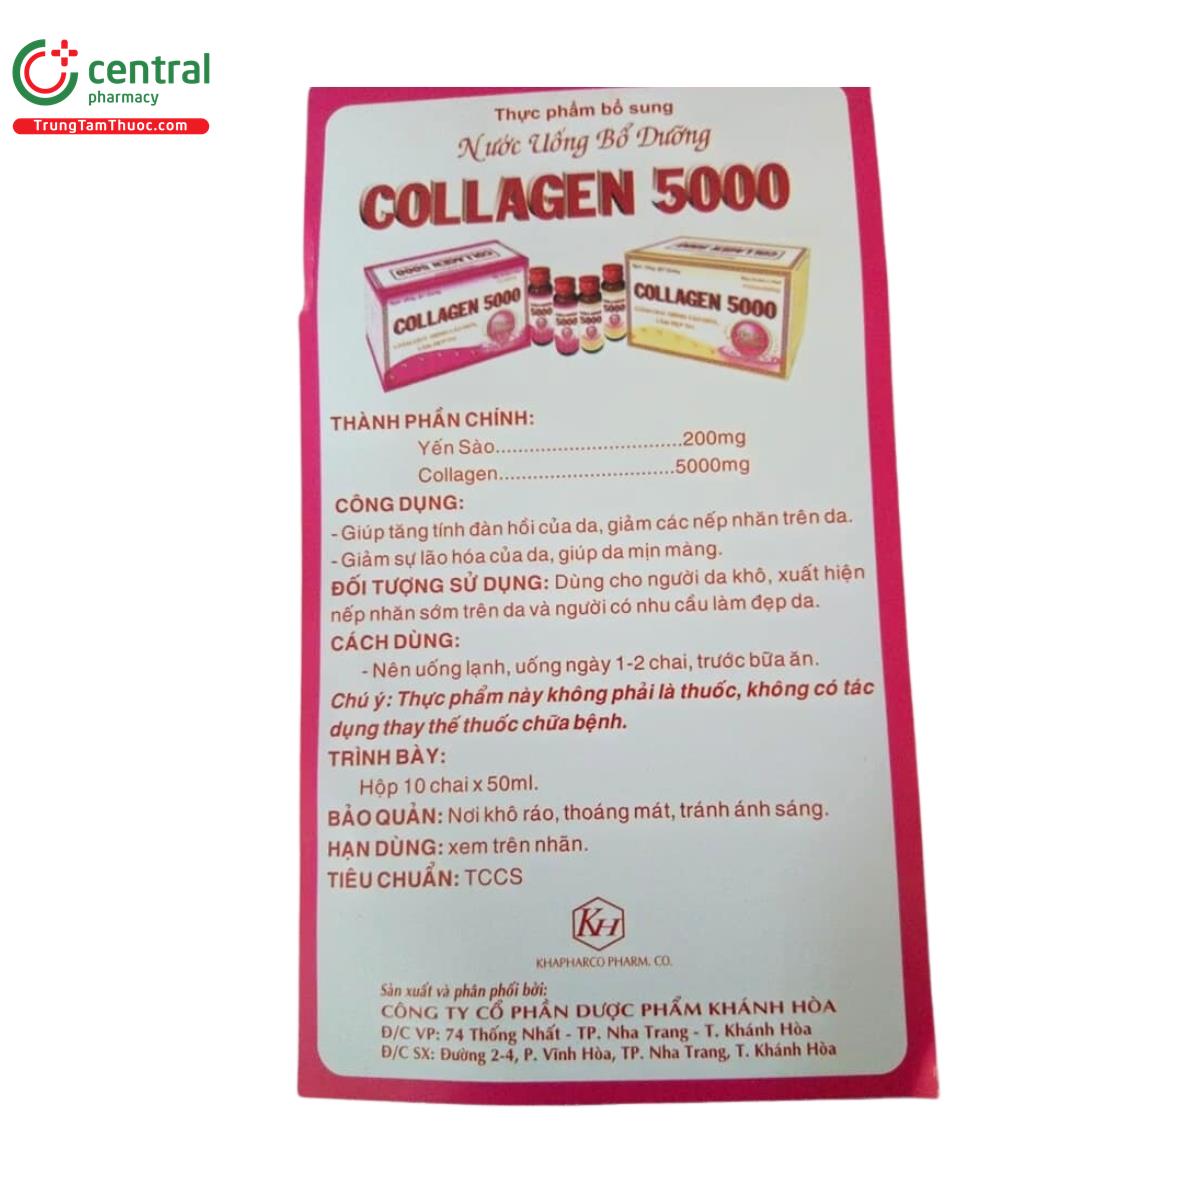 collagen 5000 khapharco co duong 4 B0725